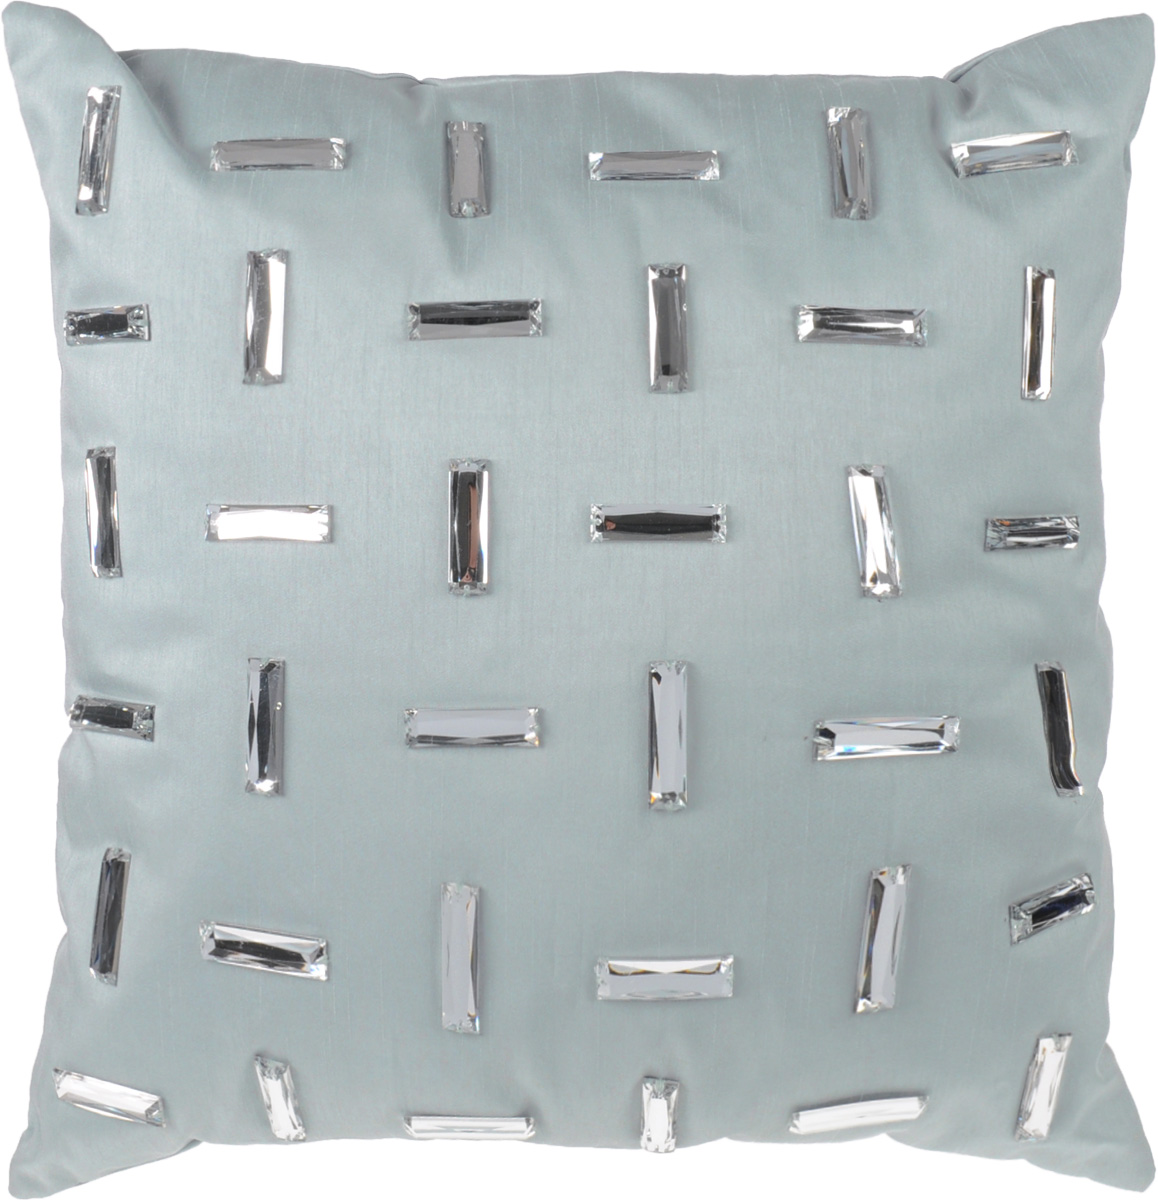 фото Декоративная подушка "Коллекция", цвет: серый, 40 см х 40 см. ПДА-6 Тм коллекция